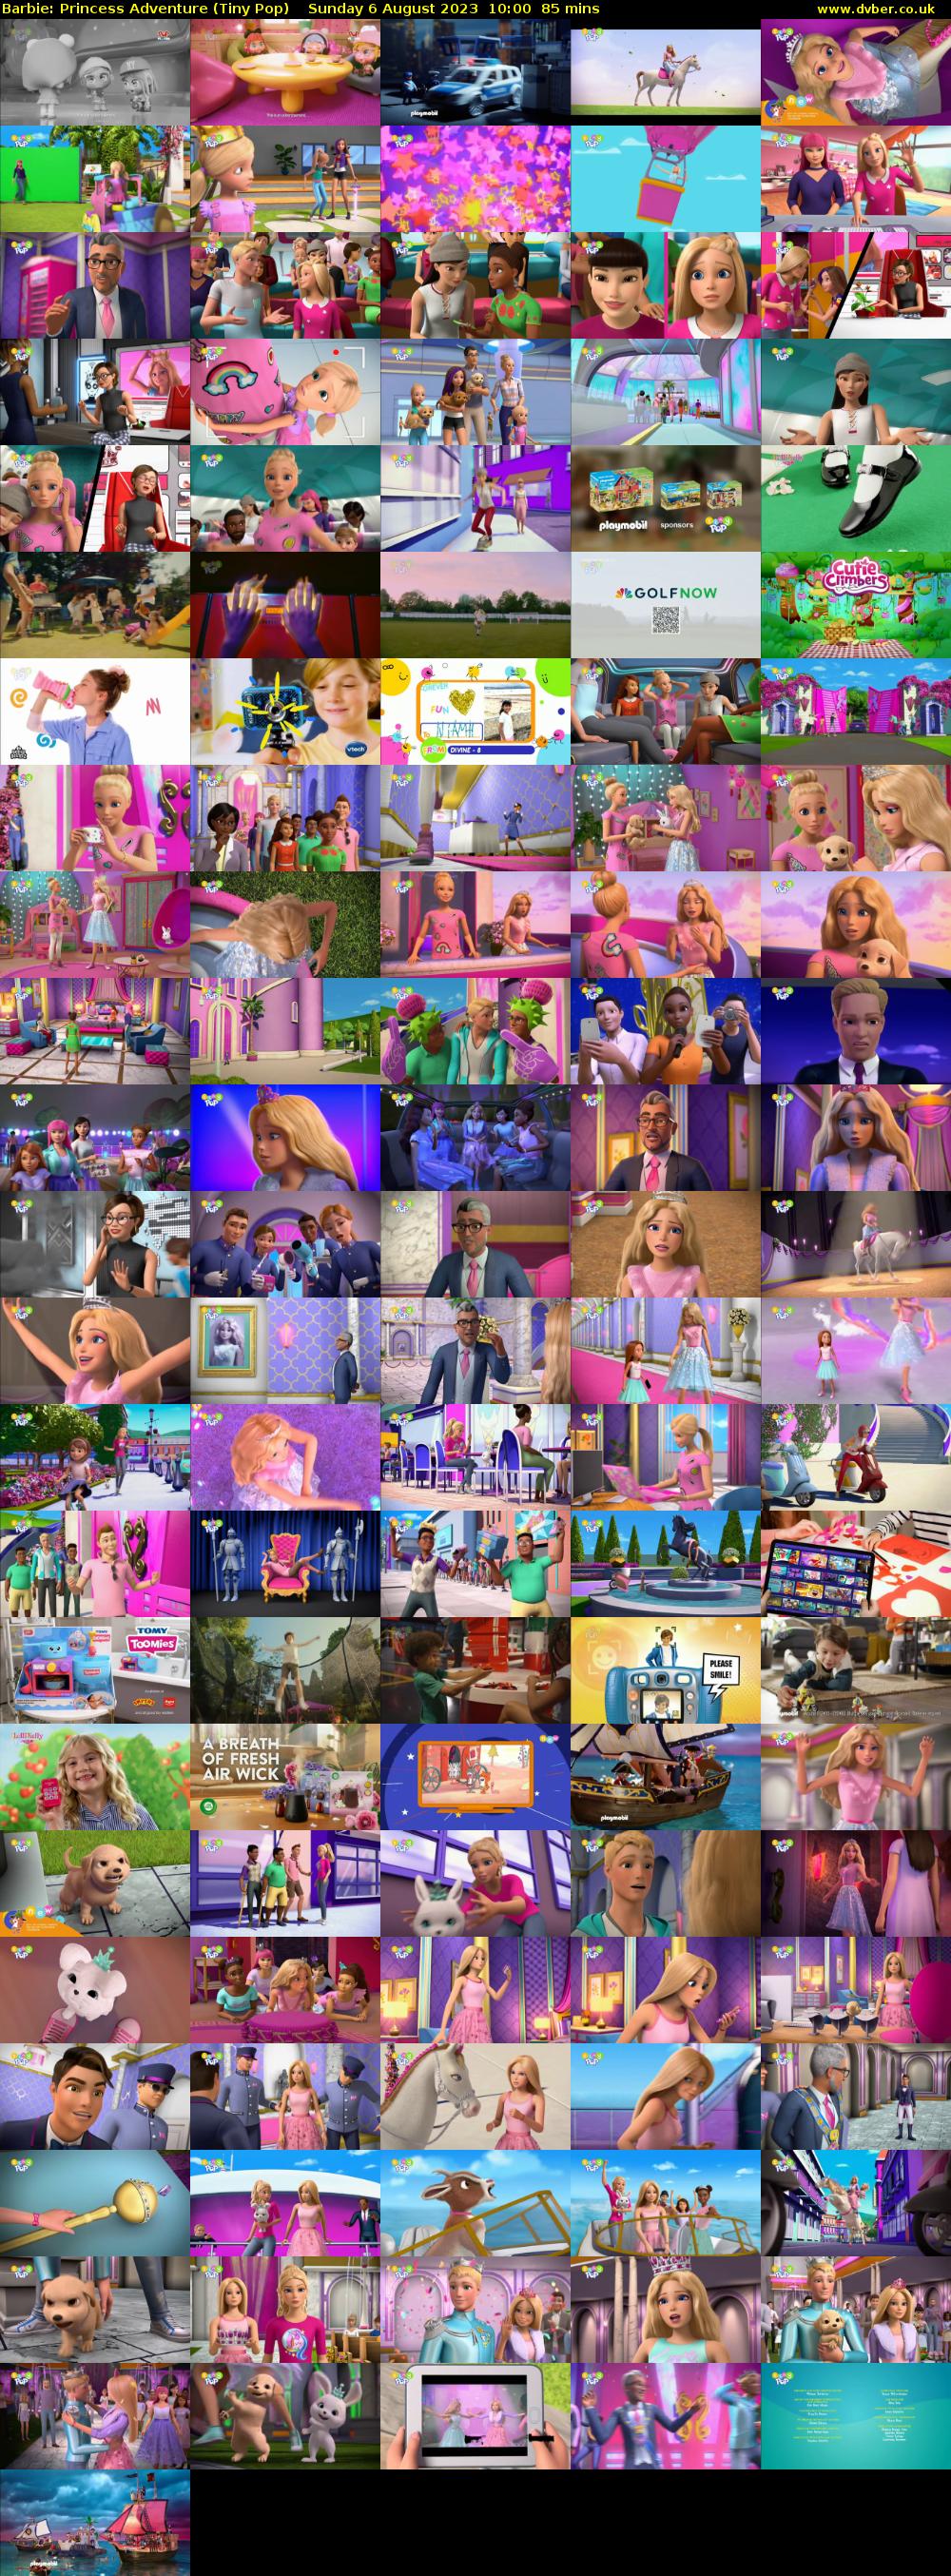 Barbie: Princess Adventure (Tiny Pop) Sunday 6 August 2023 10:00 - 11:25